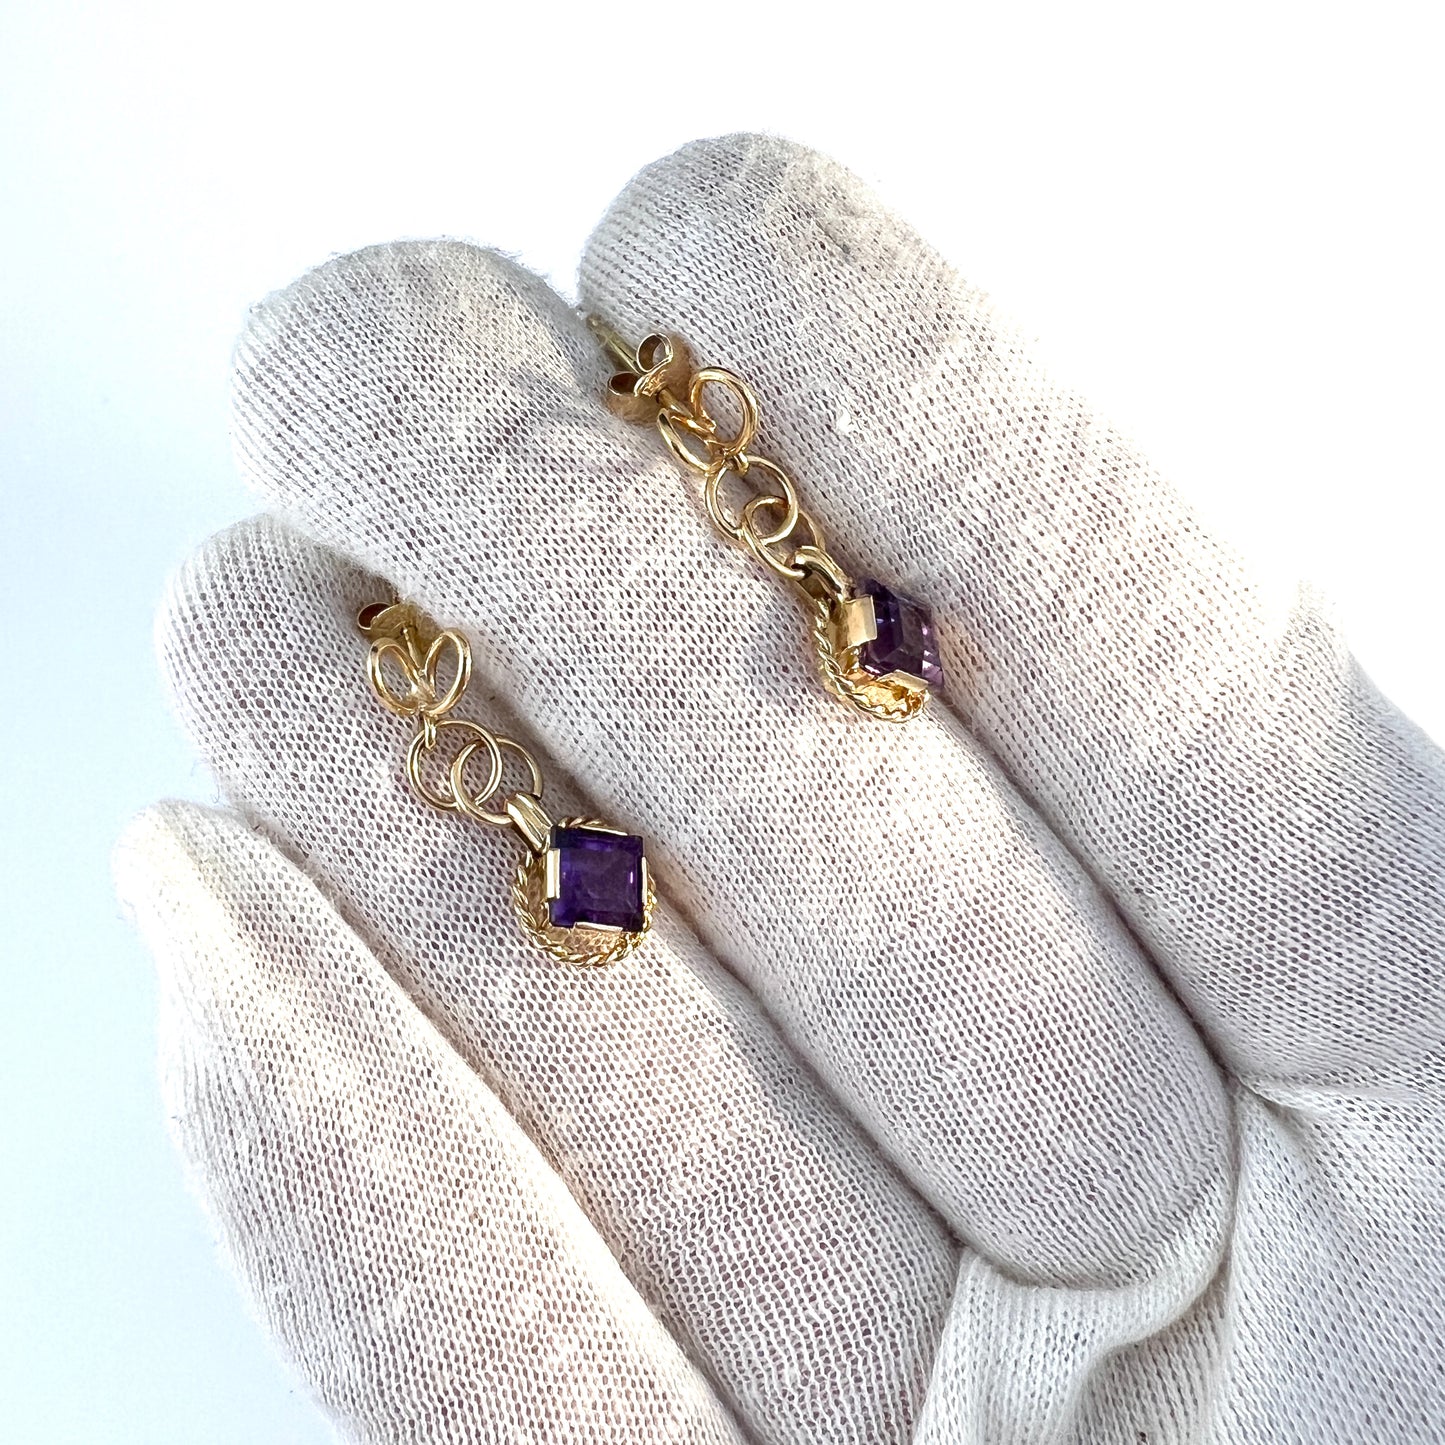 Strömdahl, Sweden 1950-60s. Vintage 18k Gold Amethyst Earrings